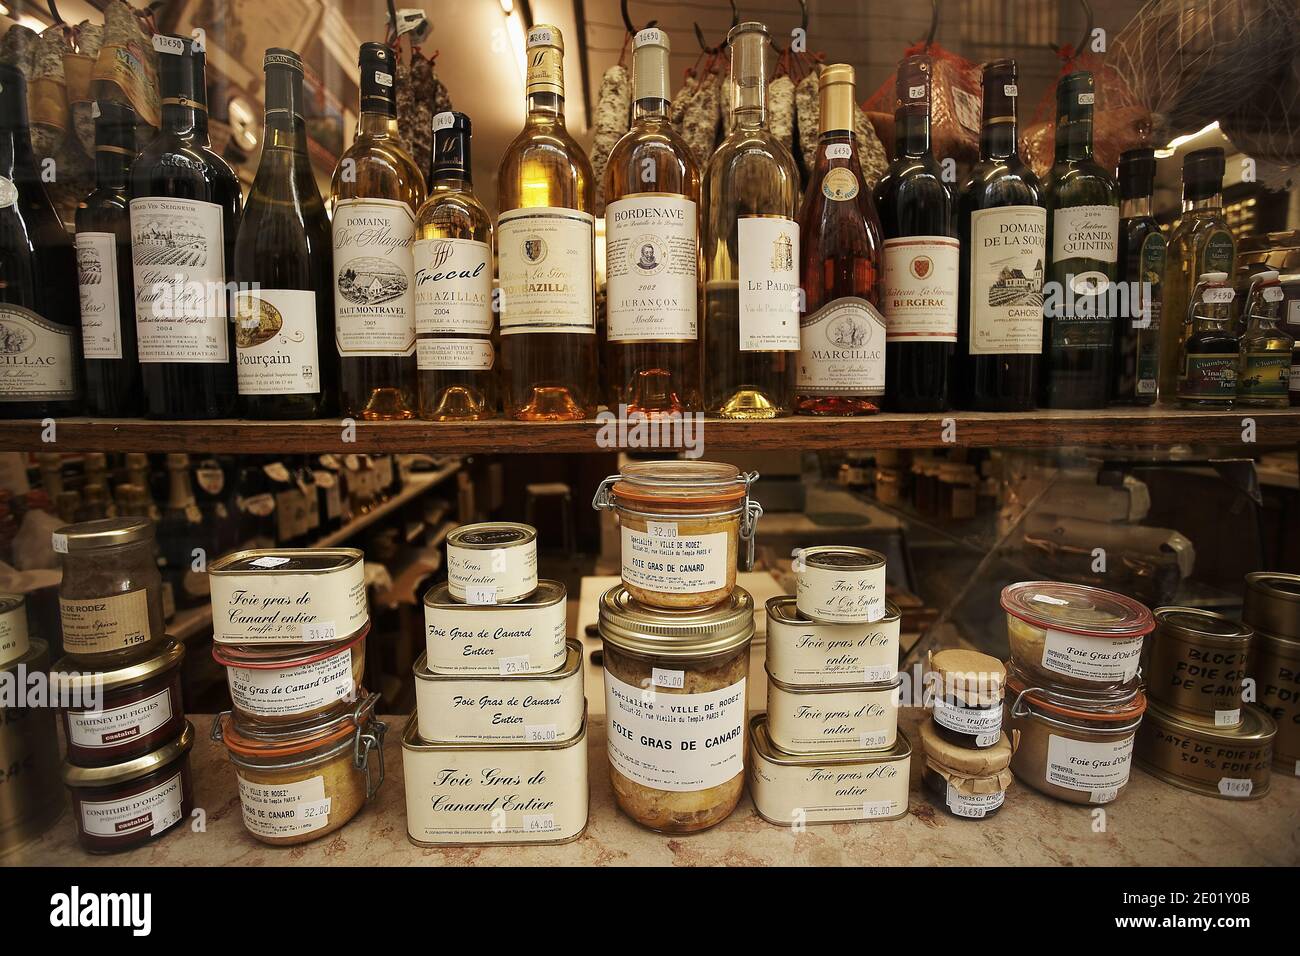 FRANCE / IIe-de-France/Paris/ Le Marais/ Small local delicatessen  in Paris Stock Photo